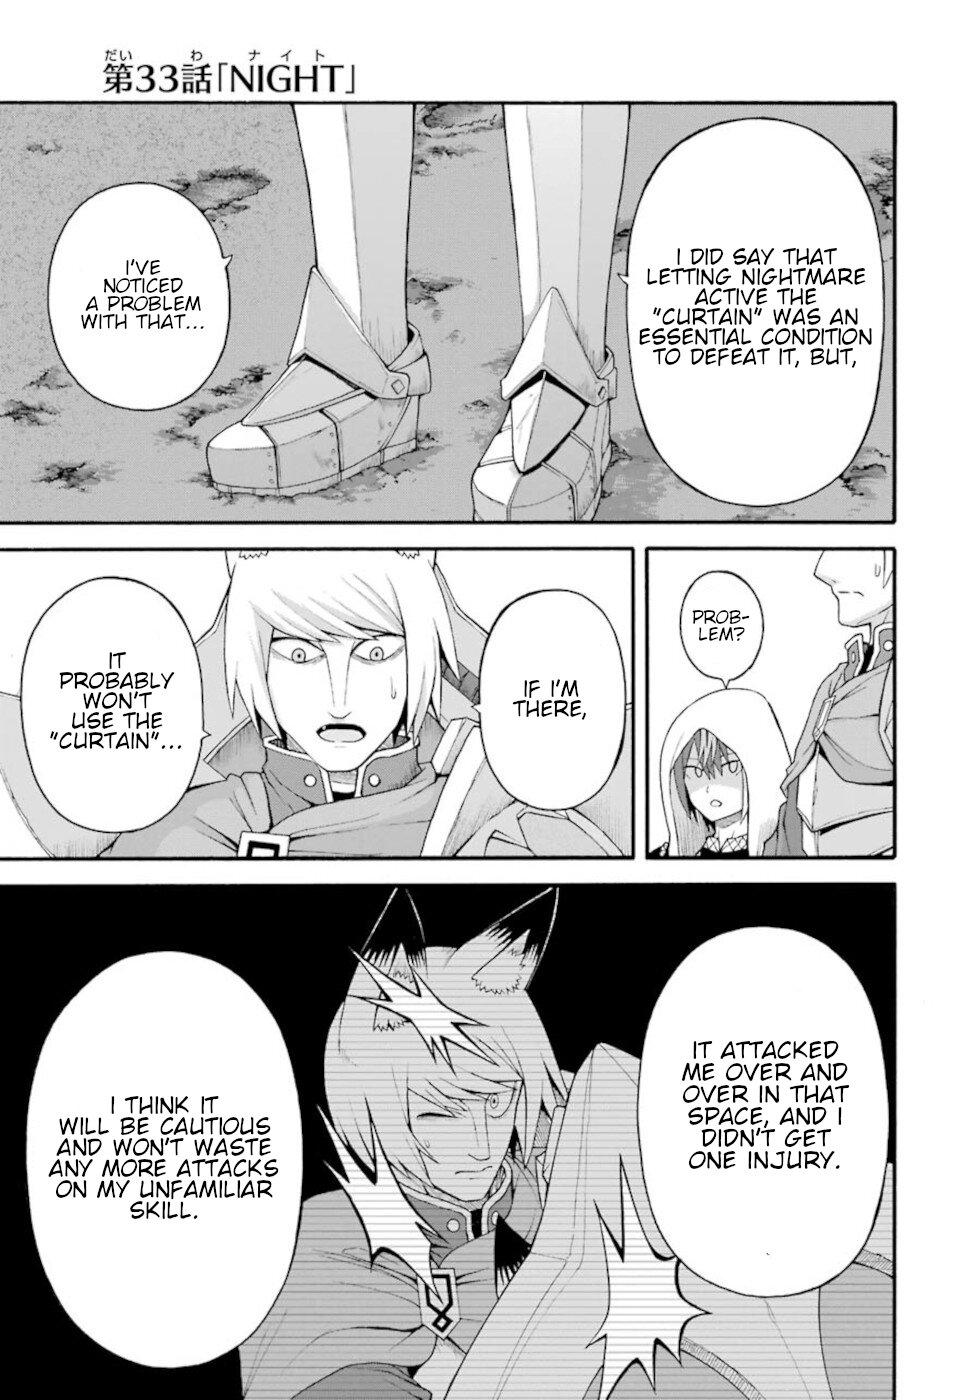 So you two do that?, Futoku no Guild